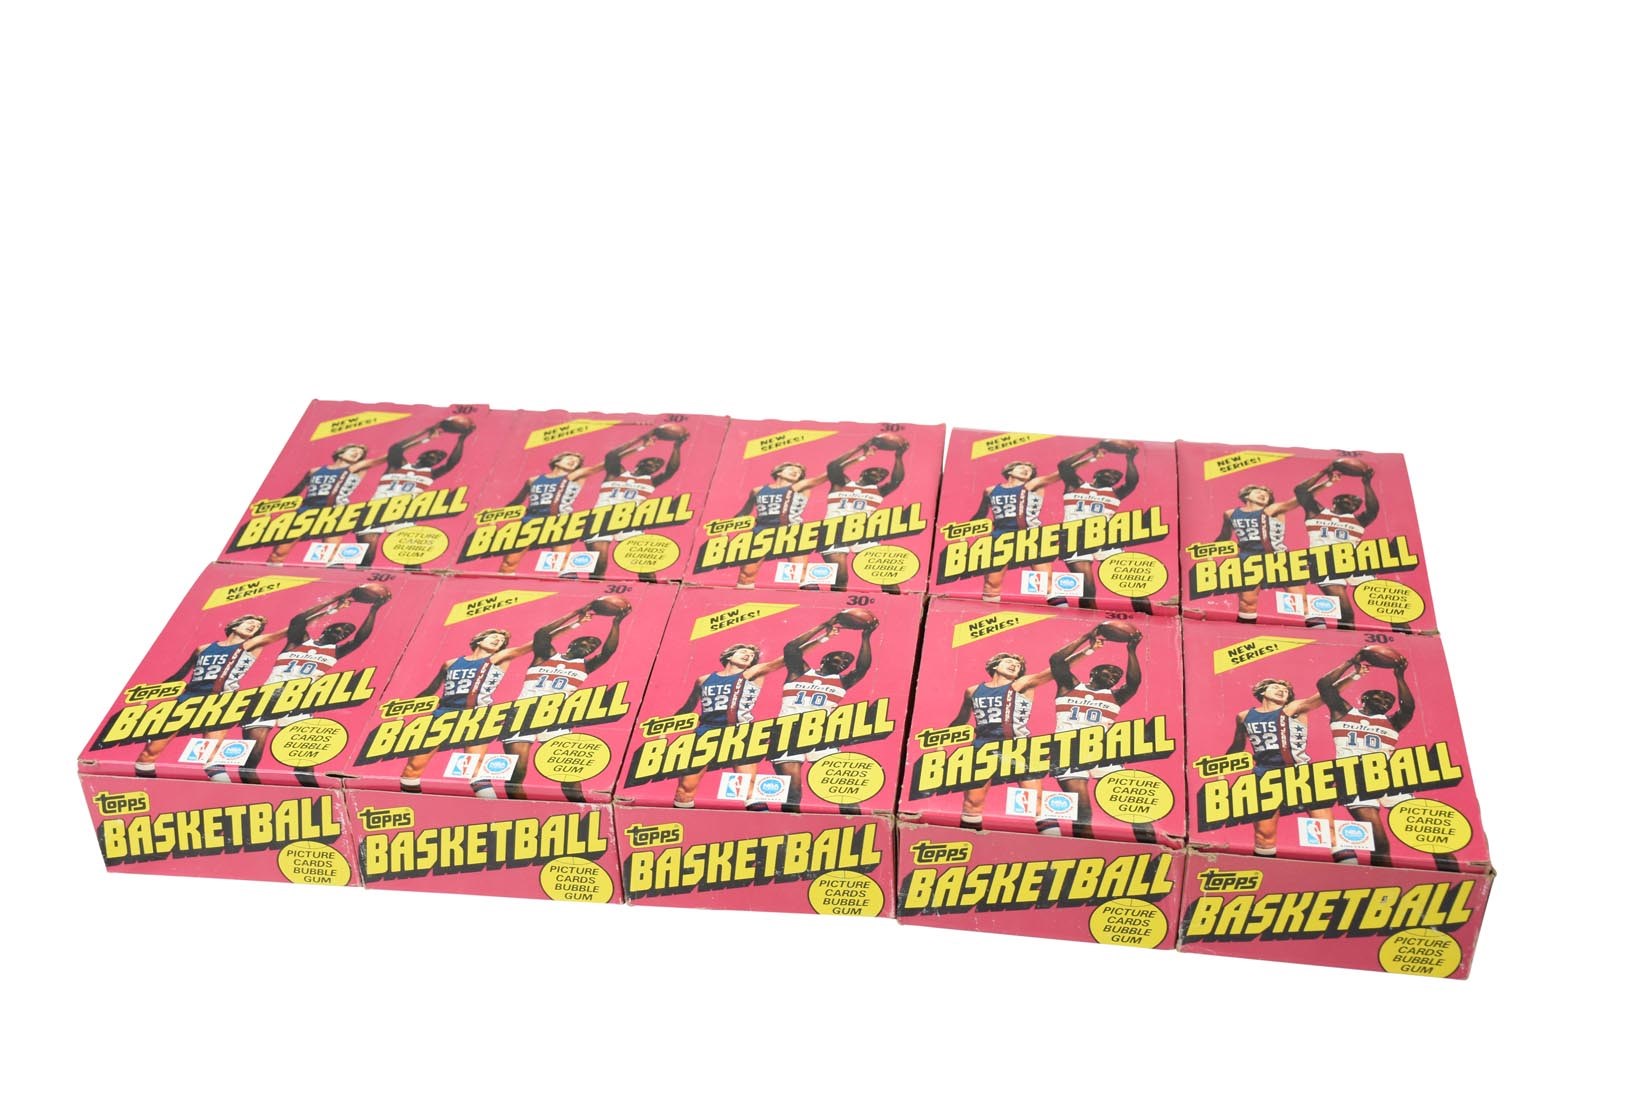 - 1981 Topps Basketball Wax Box Lot of 10 Boxes with Original Wax Carton!